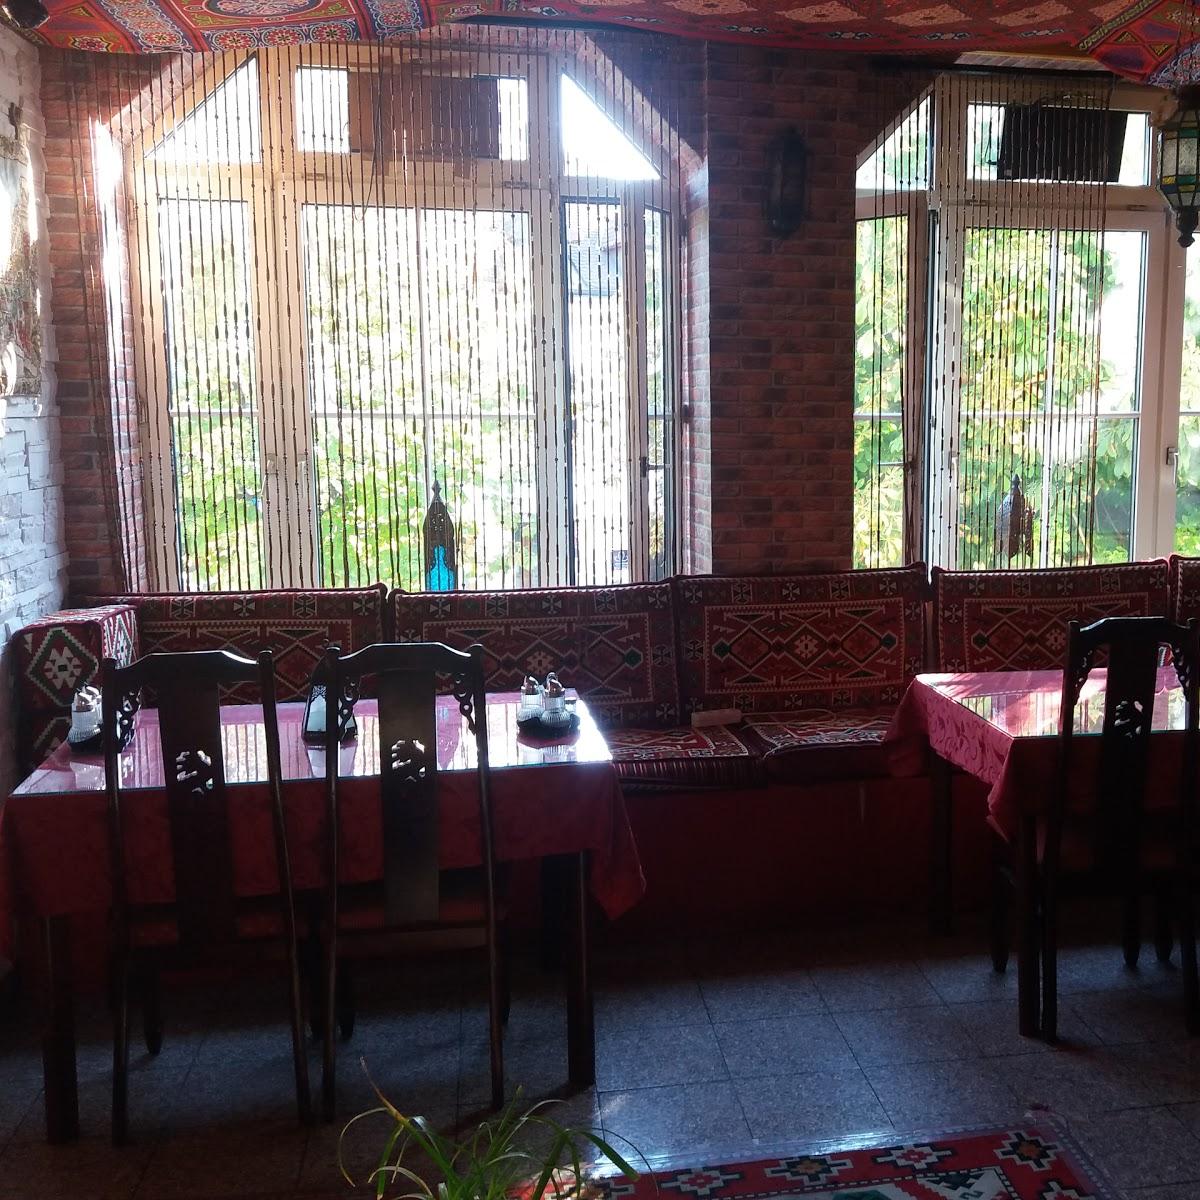 Restaurant "Latakia pizzeria café Restaurant & Shisha Bar" in Amstetten